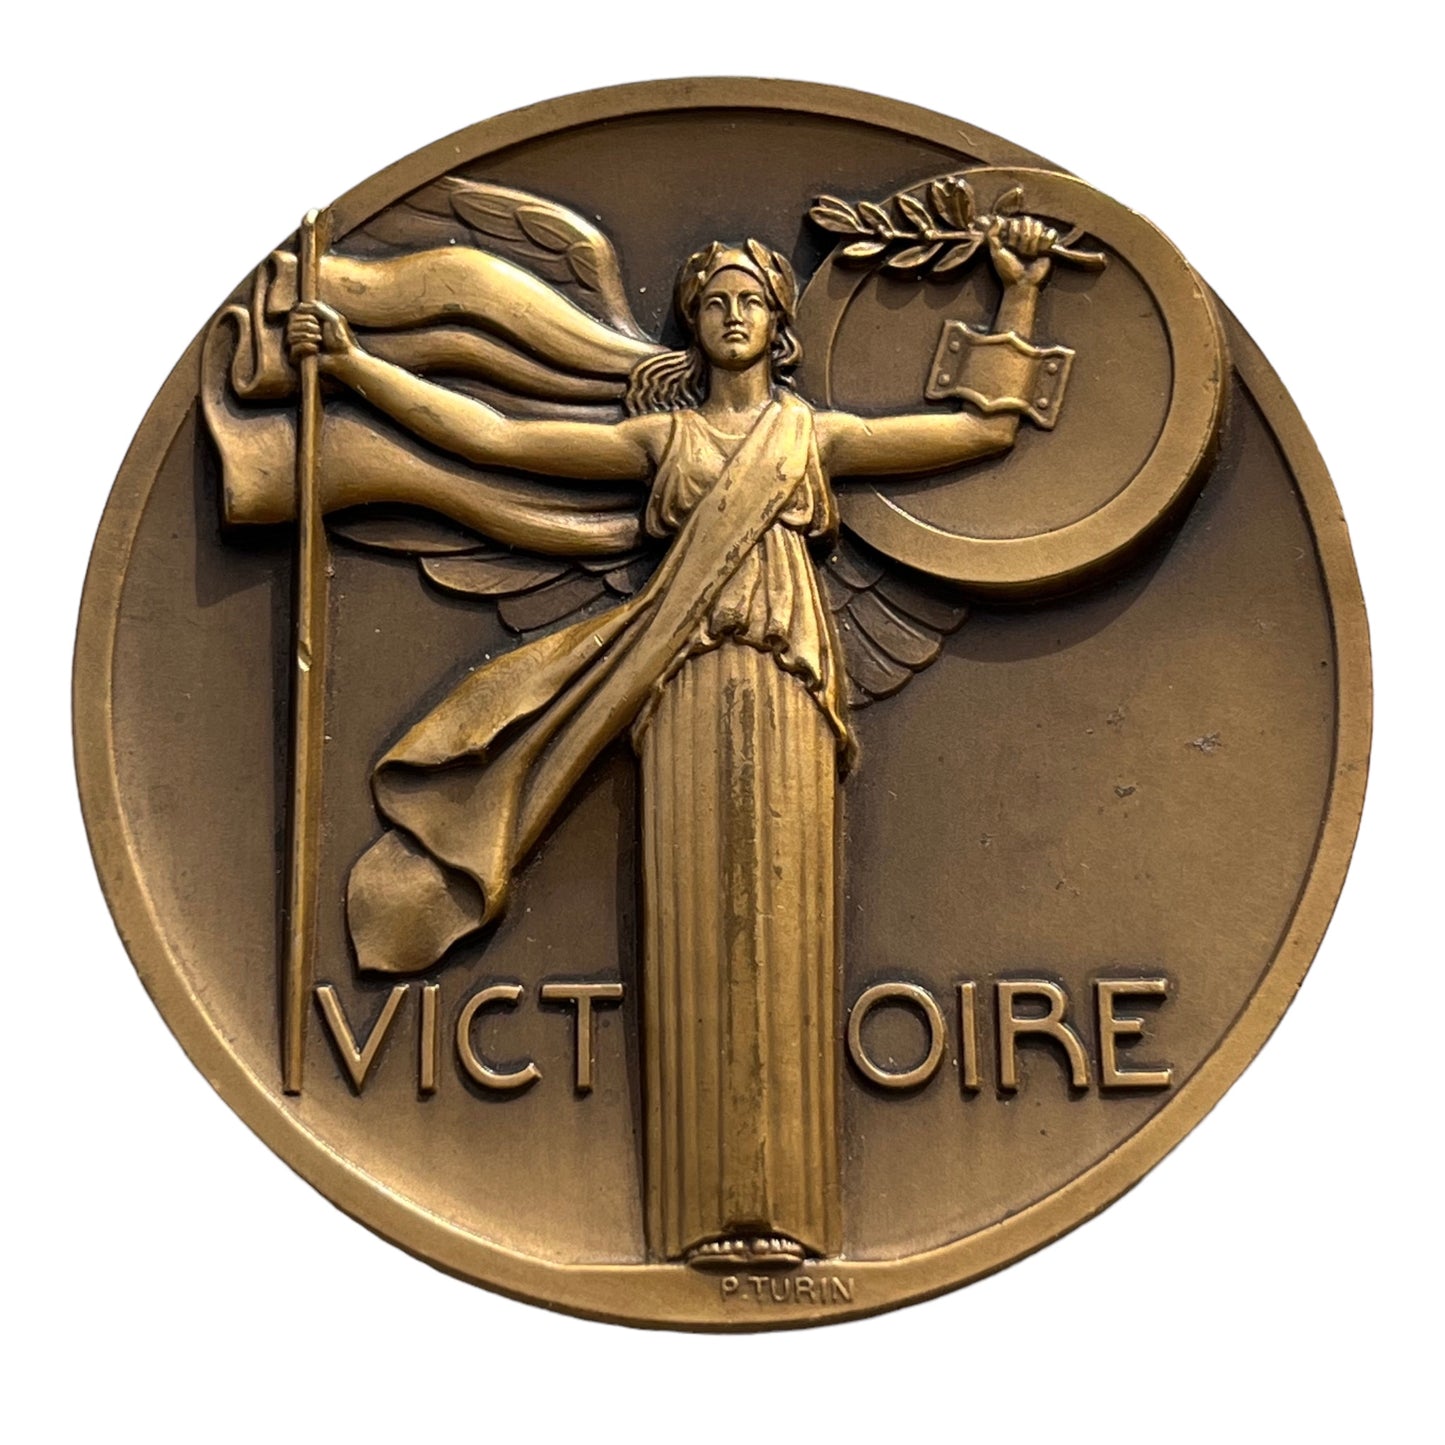 medaille bronze Libération de Paris 1944 de TURIN